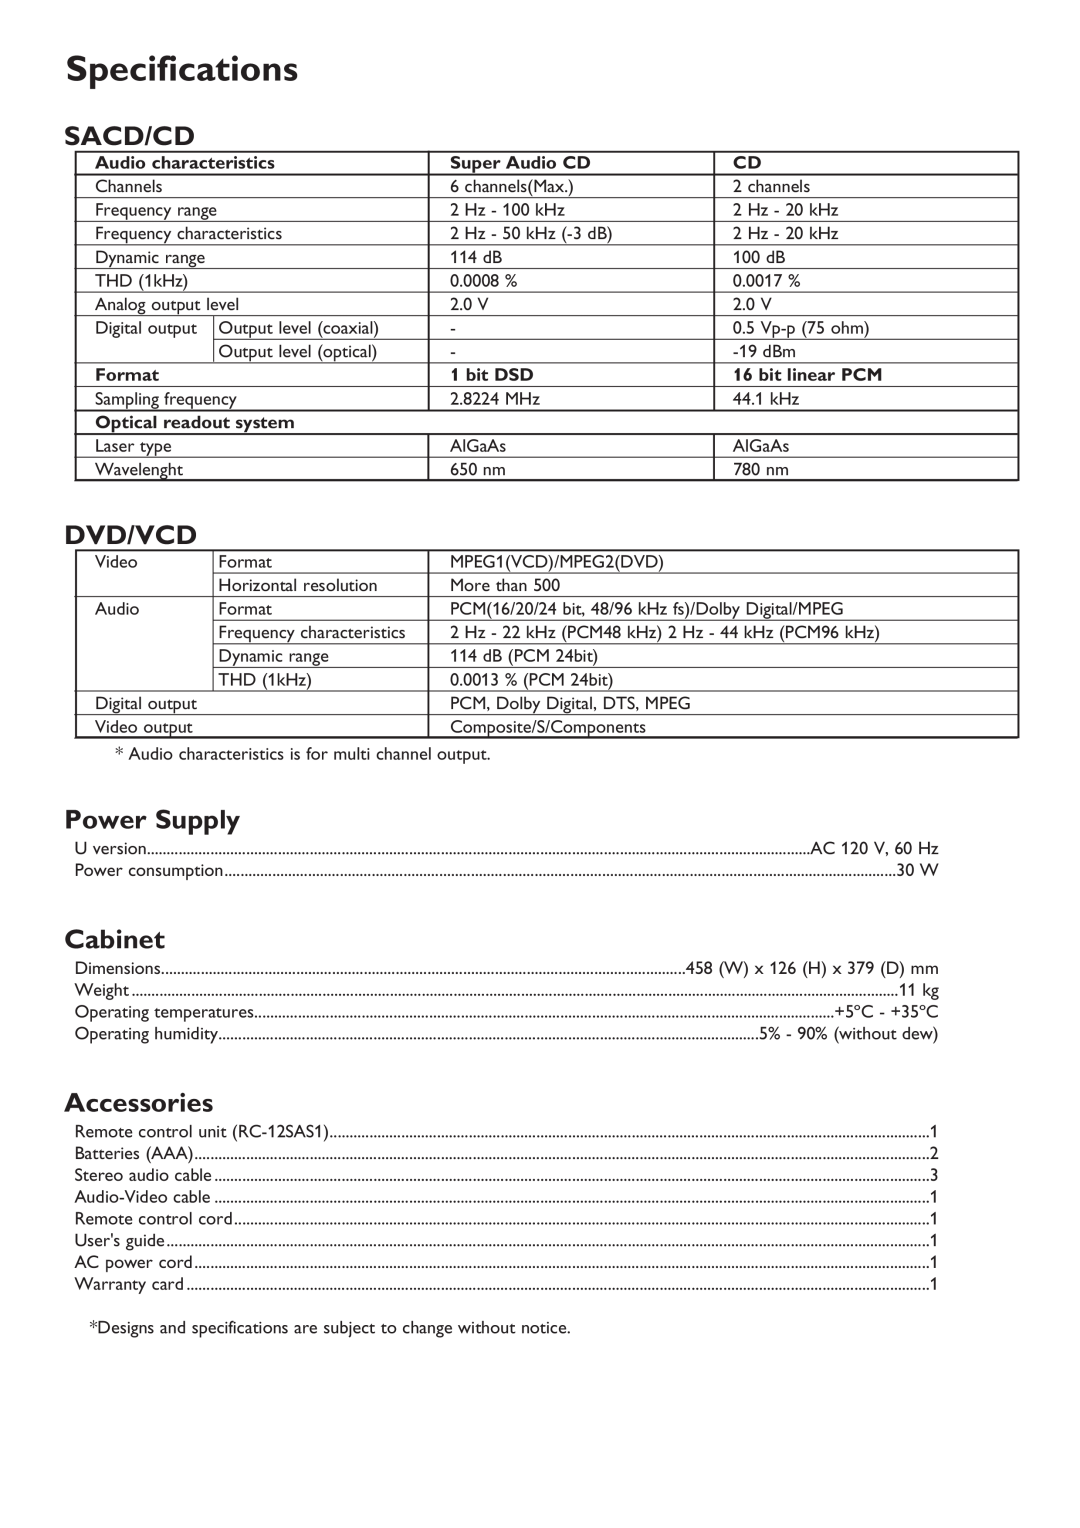 Marantz SA-12S1 manual Specifications, Sacd/Cd, Dvd/Vcd, Power Supply, Cabinet, Accessories, Audio characteristics, Format 